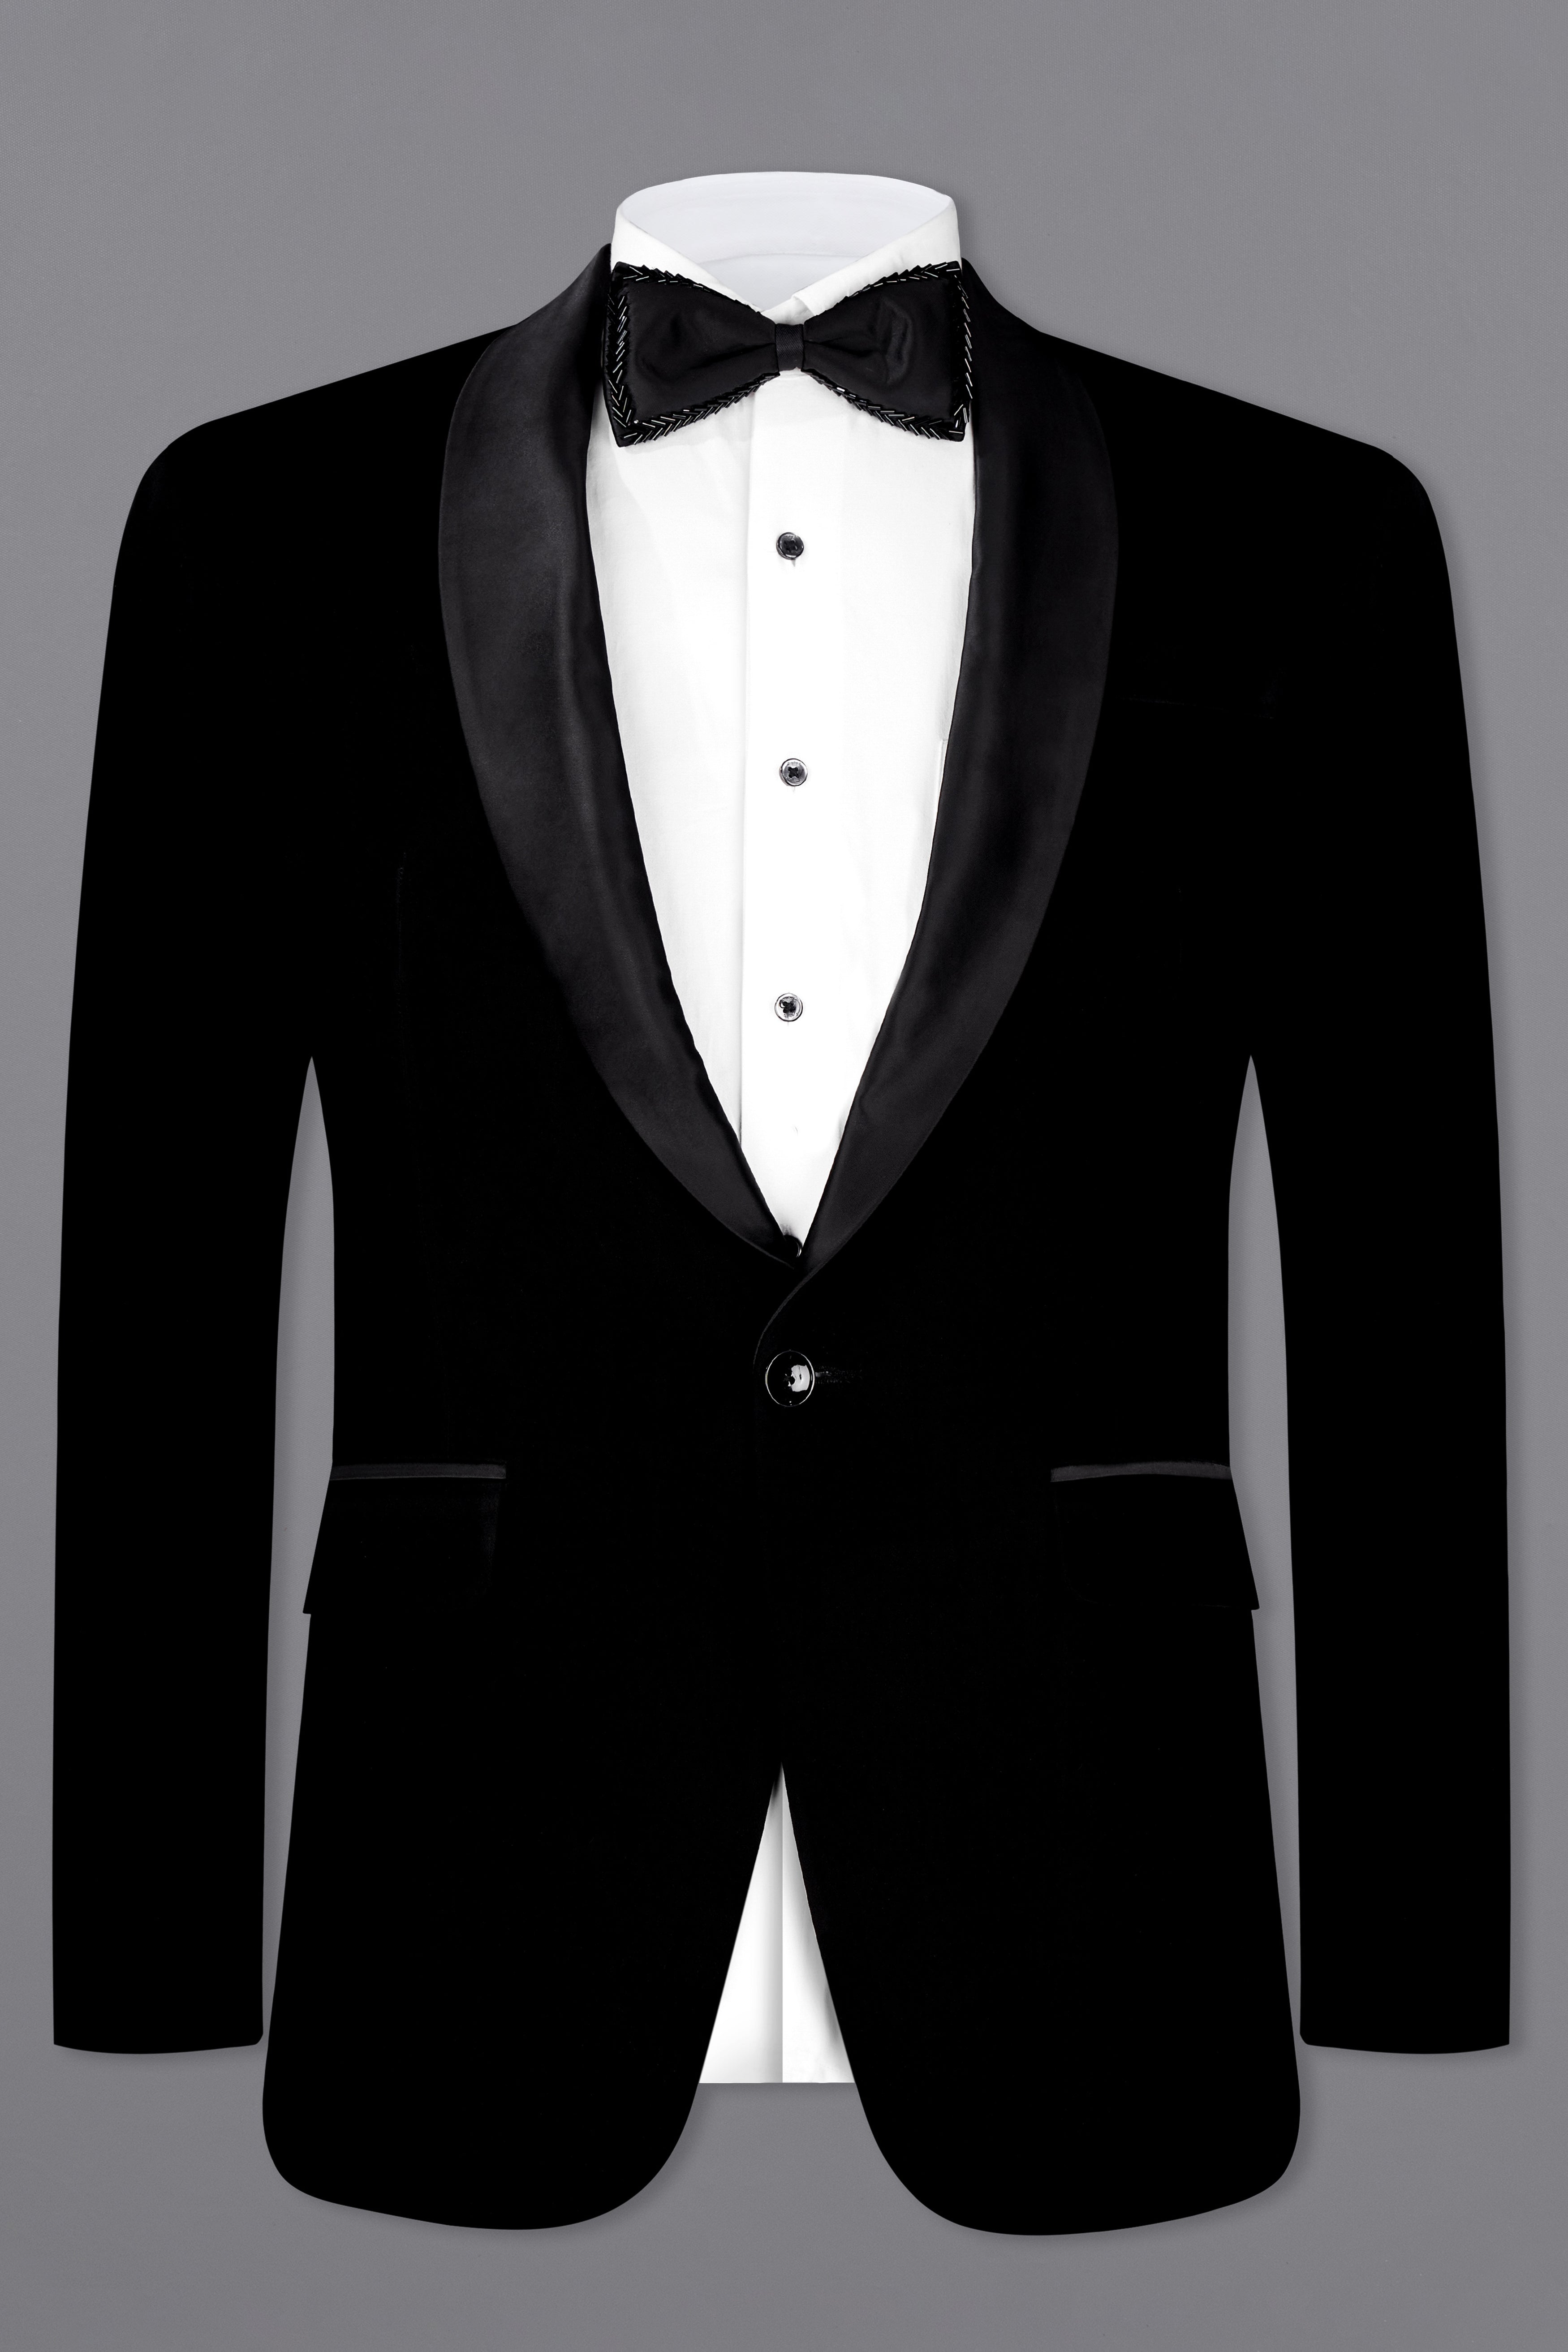 Korean Black (The Best Black We Have) Tuxedo Designer Blazer